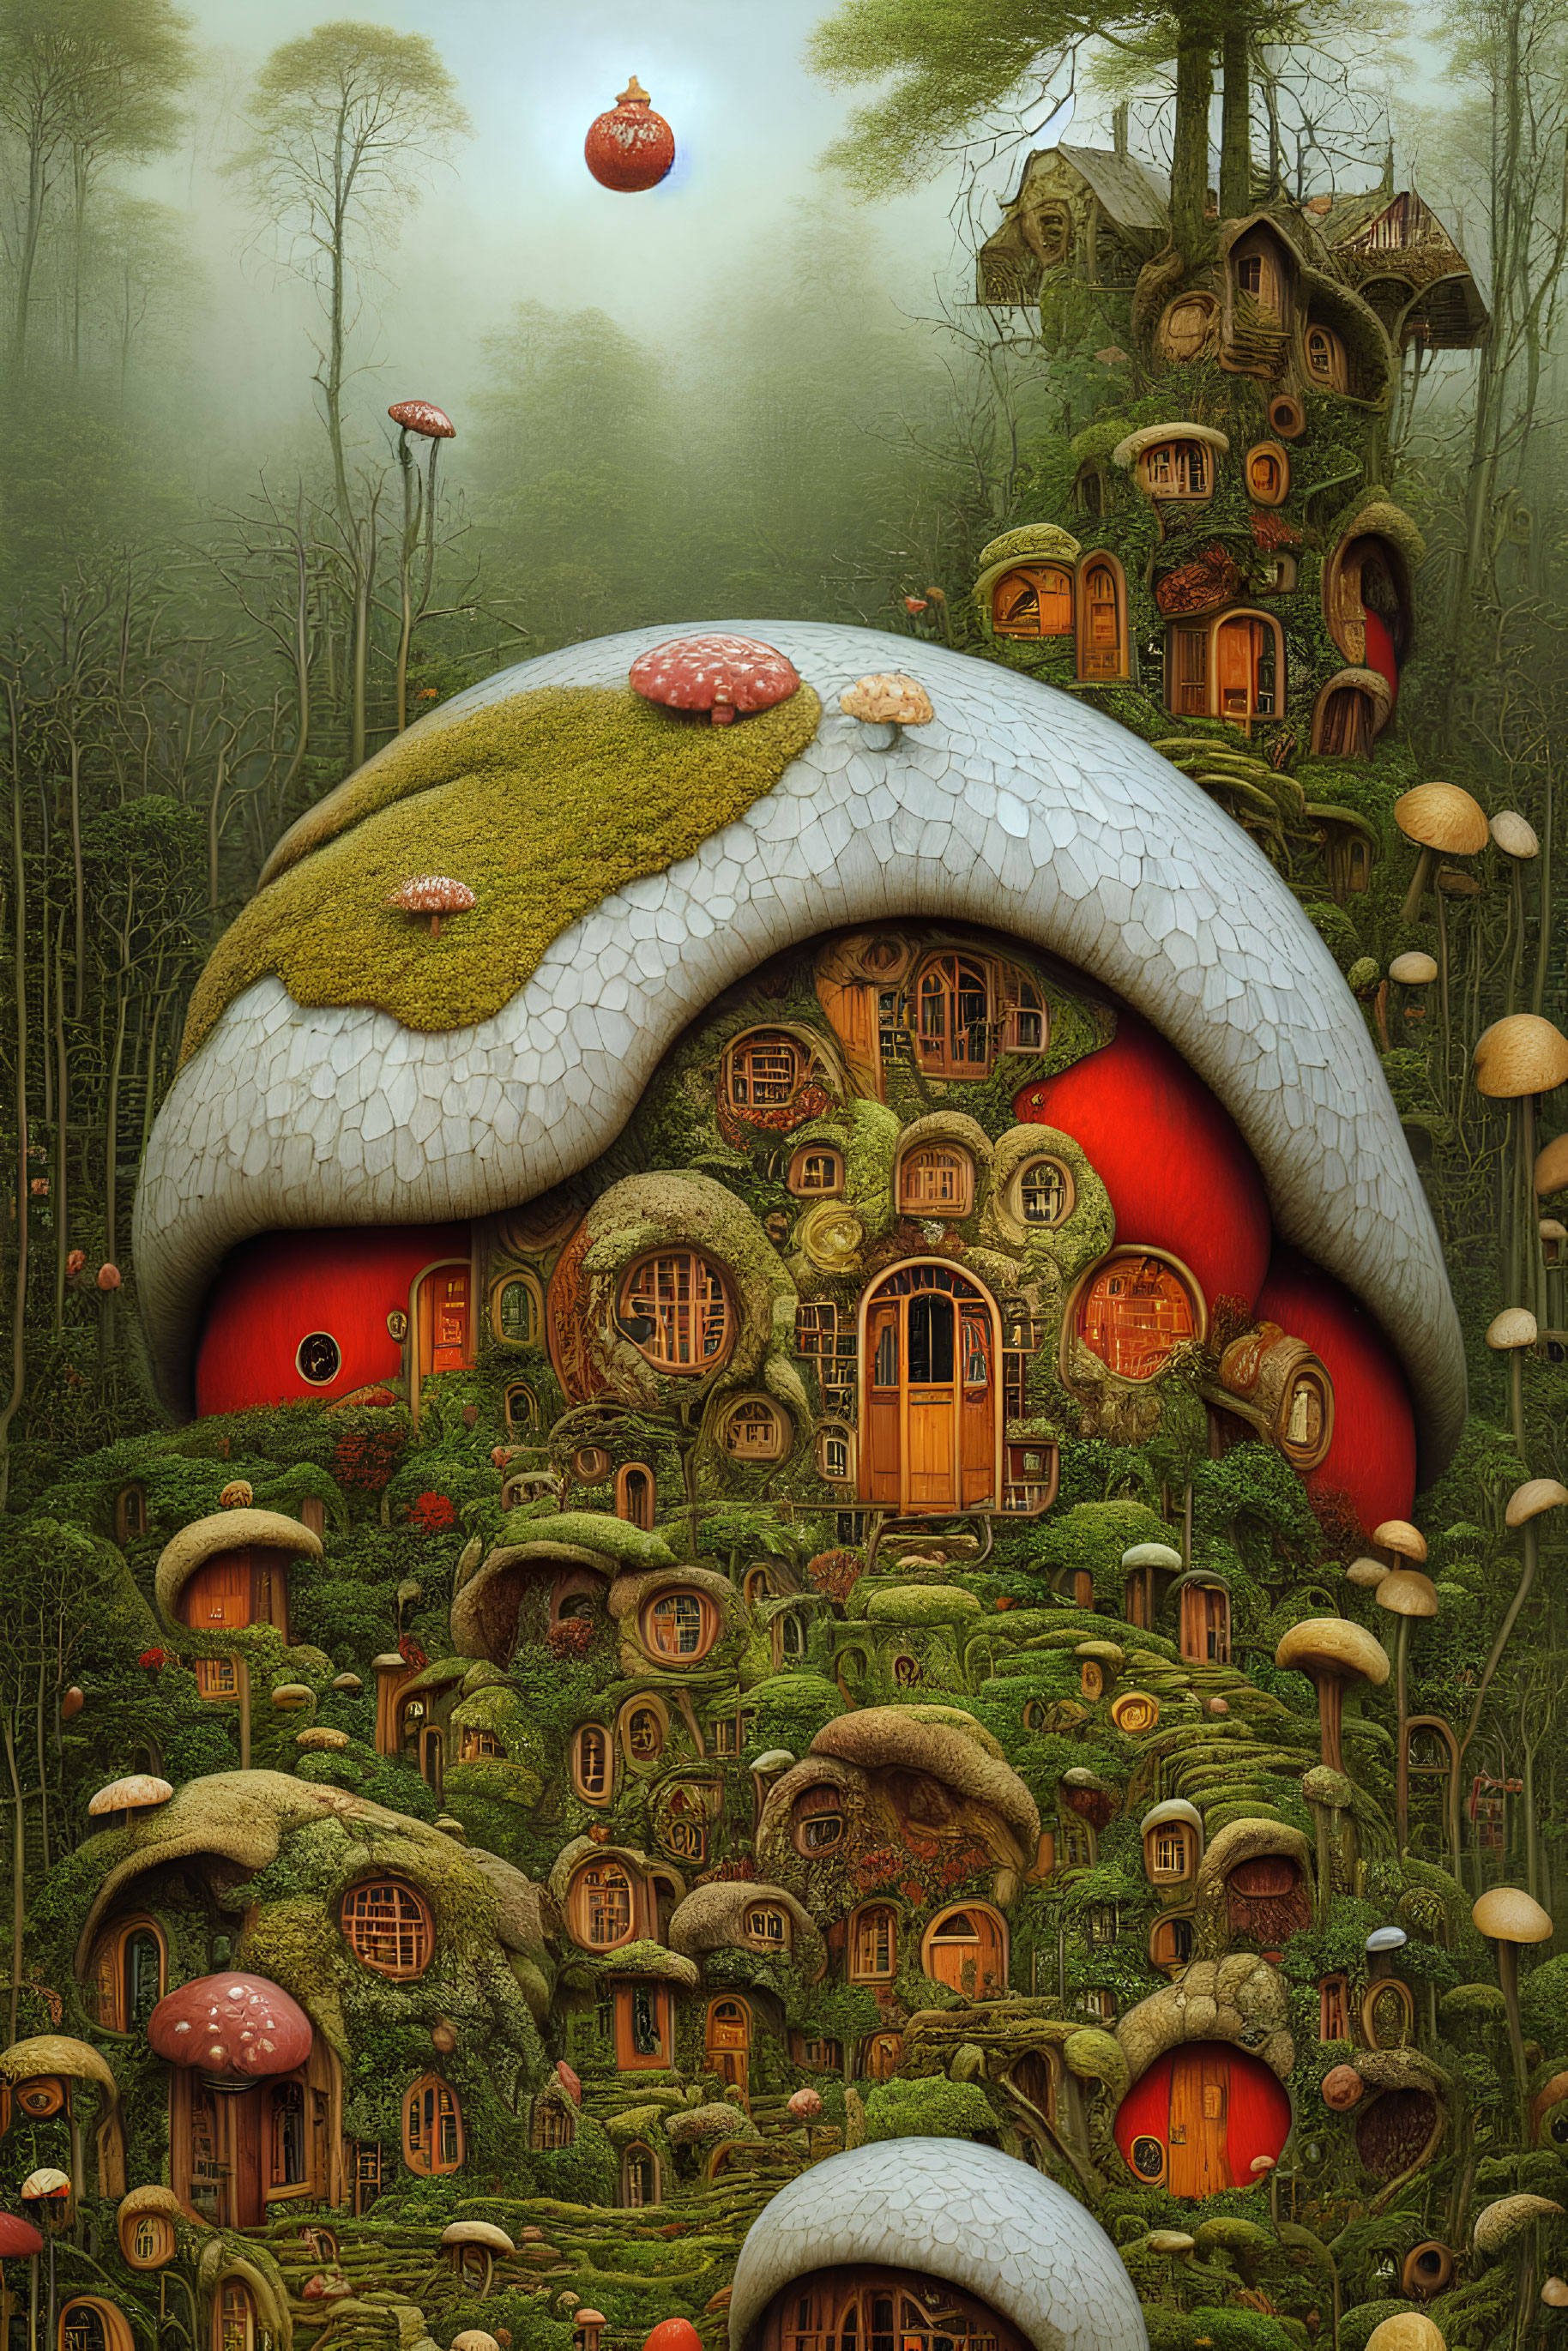 Detailed Whimsical Fairy Tale House in Mushroom Forest Scene